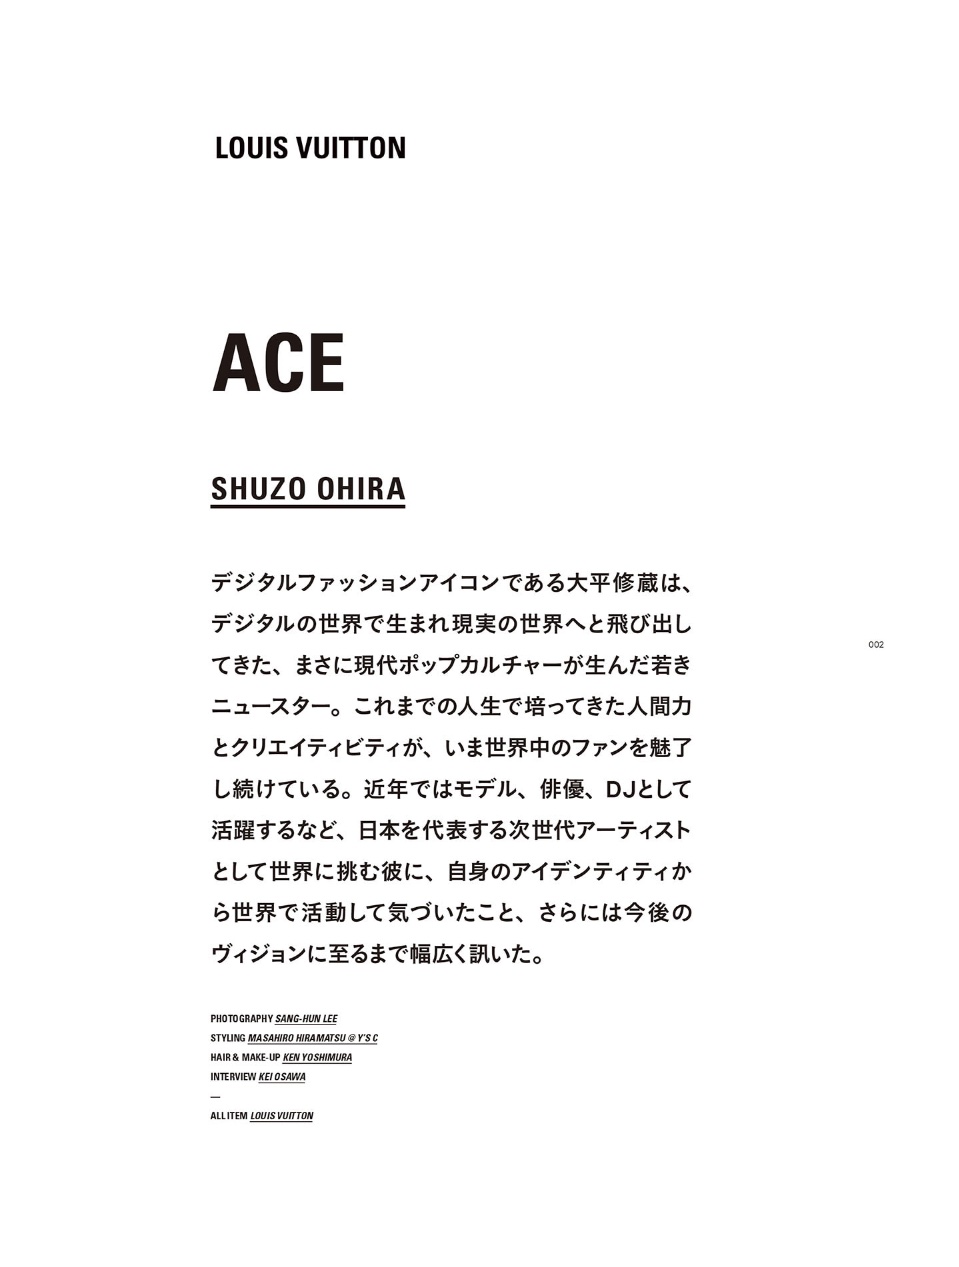 HIGHSNOBIETY Japan  –  Shuzo Ohira  ×  LOUIS VUITTON  KEN YOSHIMURA HAIR